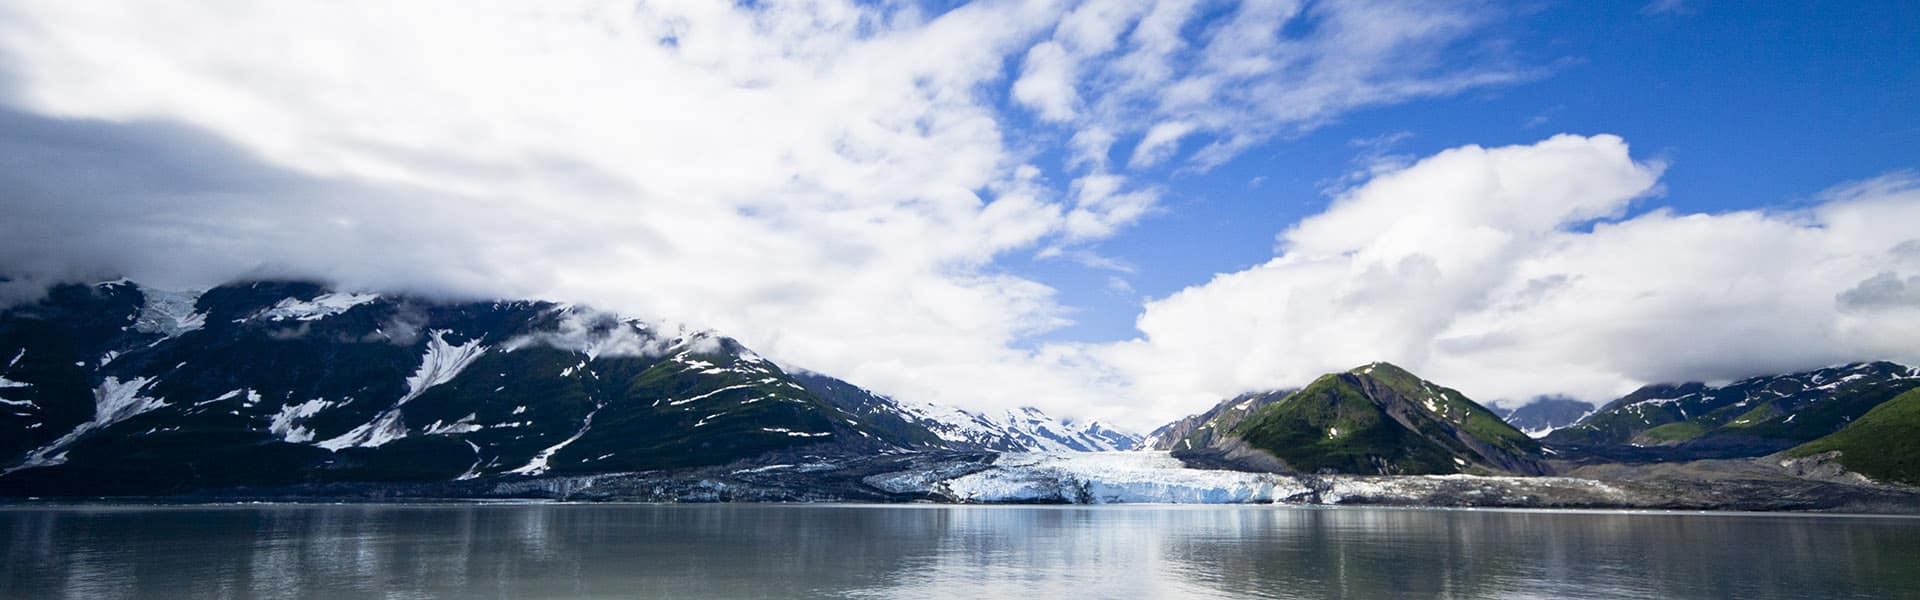 Alaska: glaciar Hubbard y Skagway